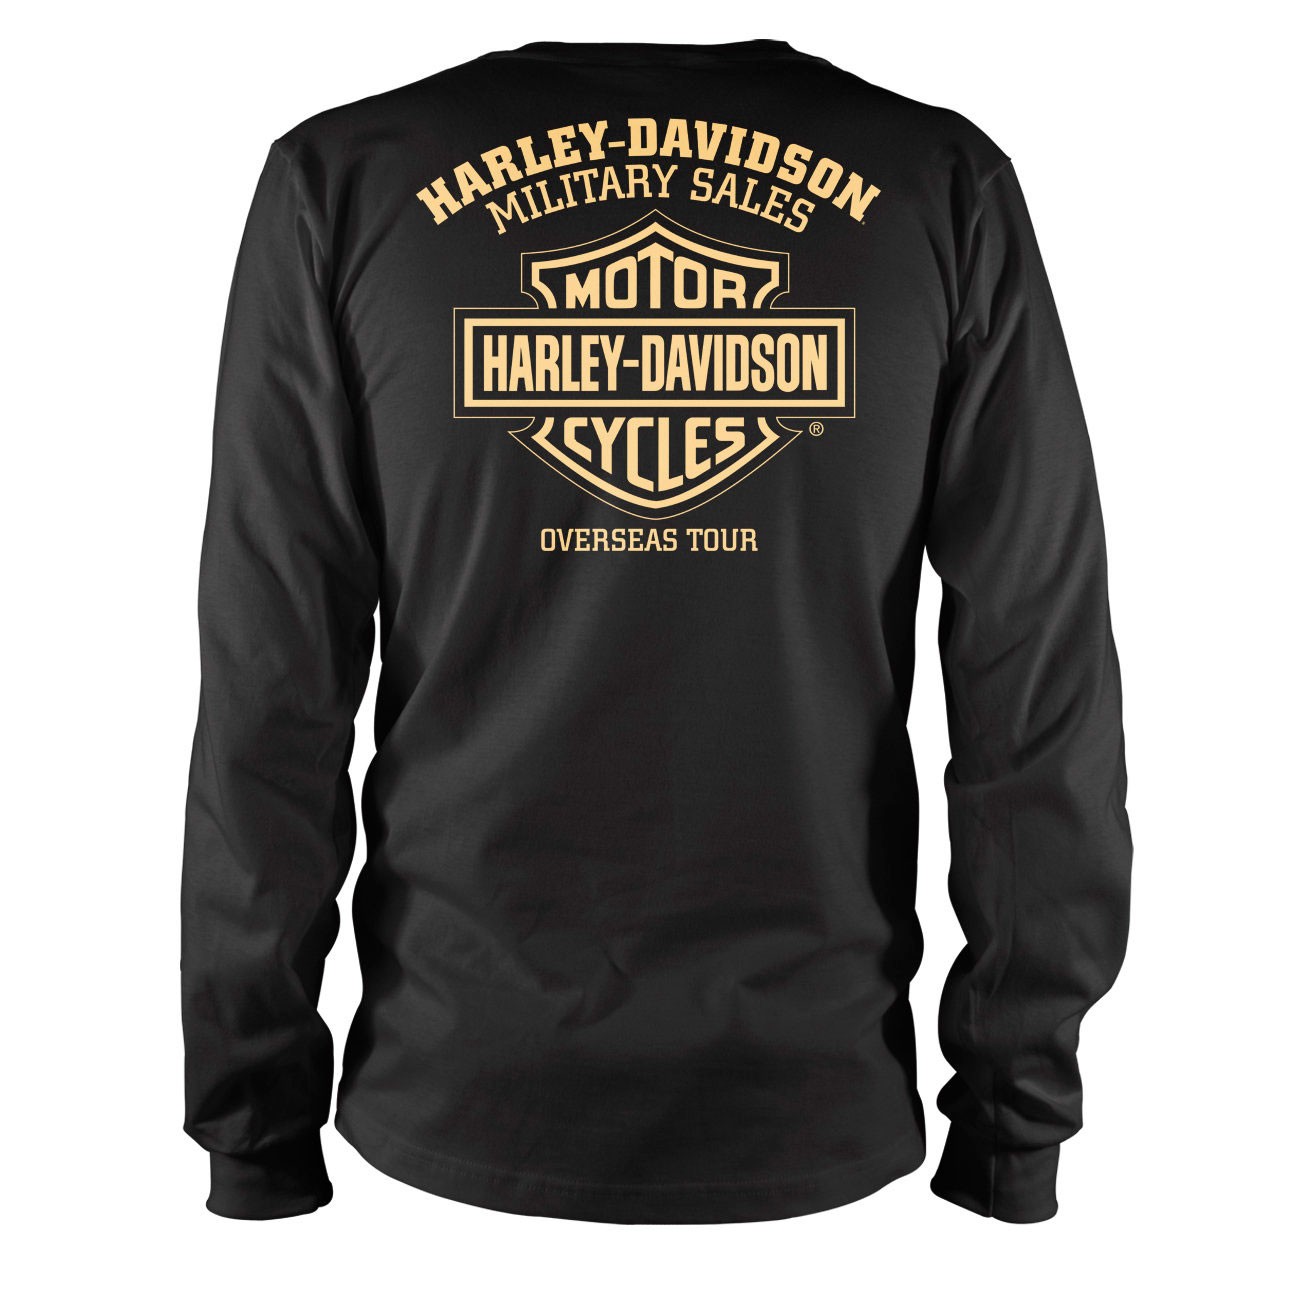  Harley  Davidson  Men s Long Sleeve T shirt Overseas Tour  